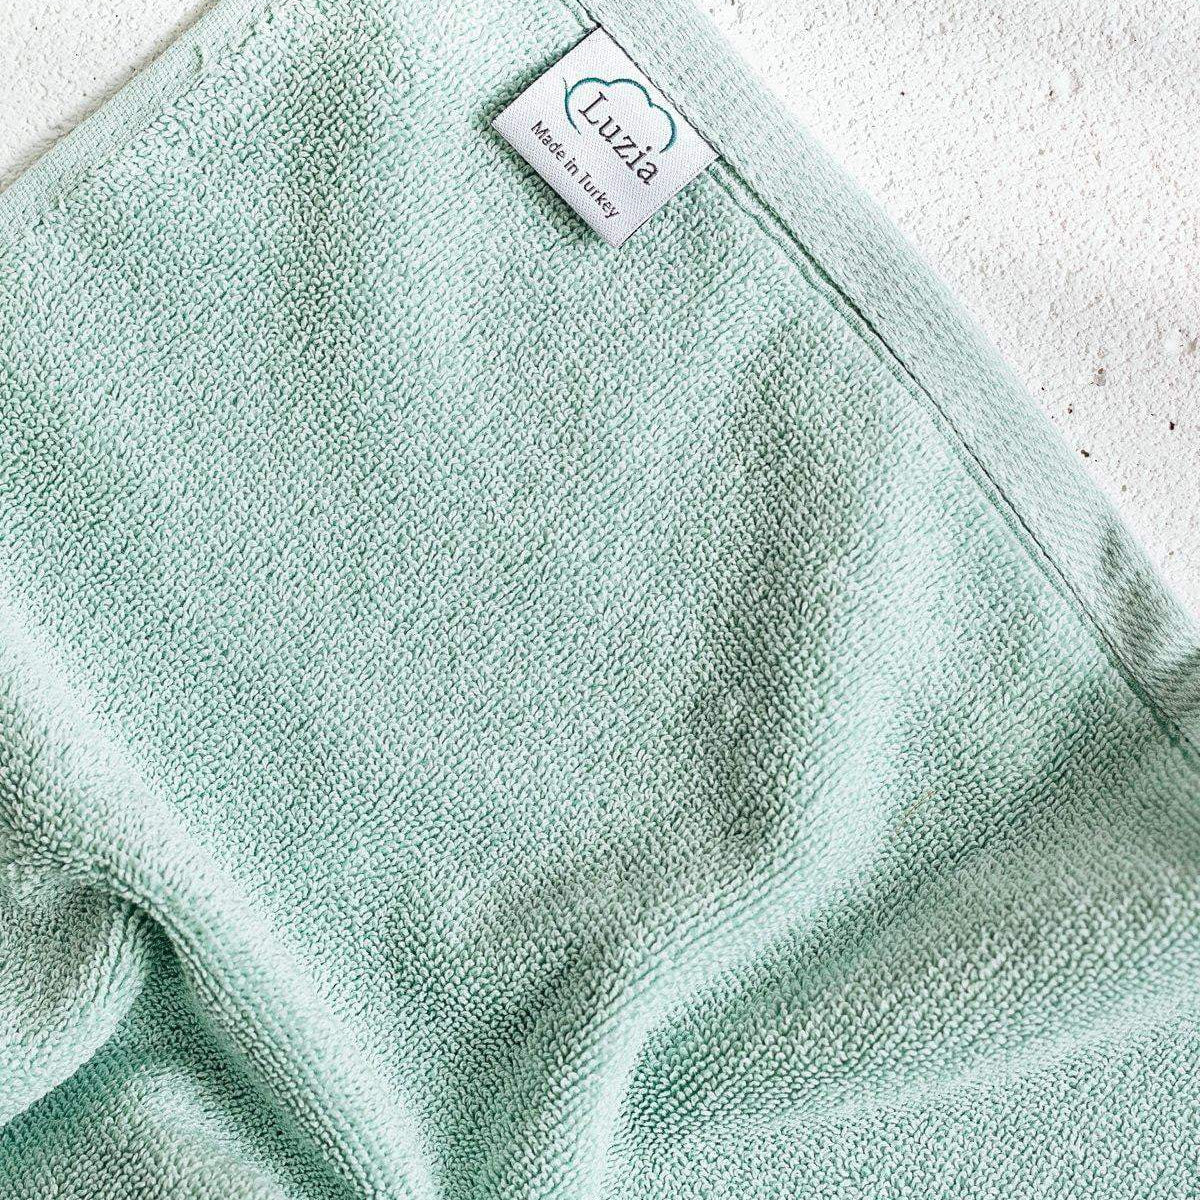 Luzia-Premium Turkish Cotton Glacier Green Towels